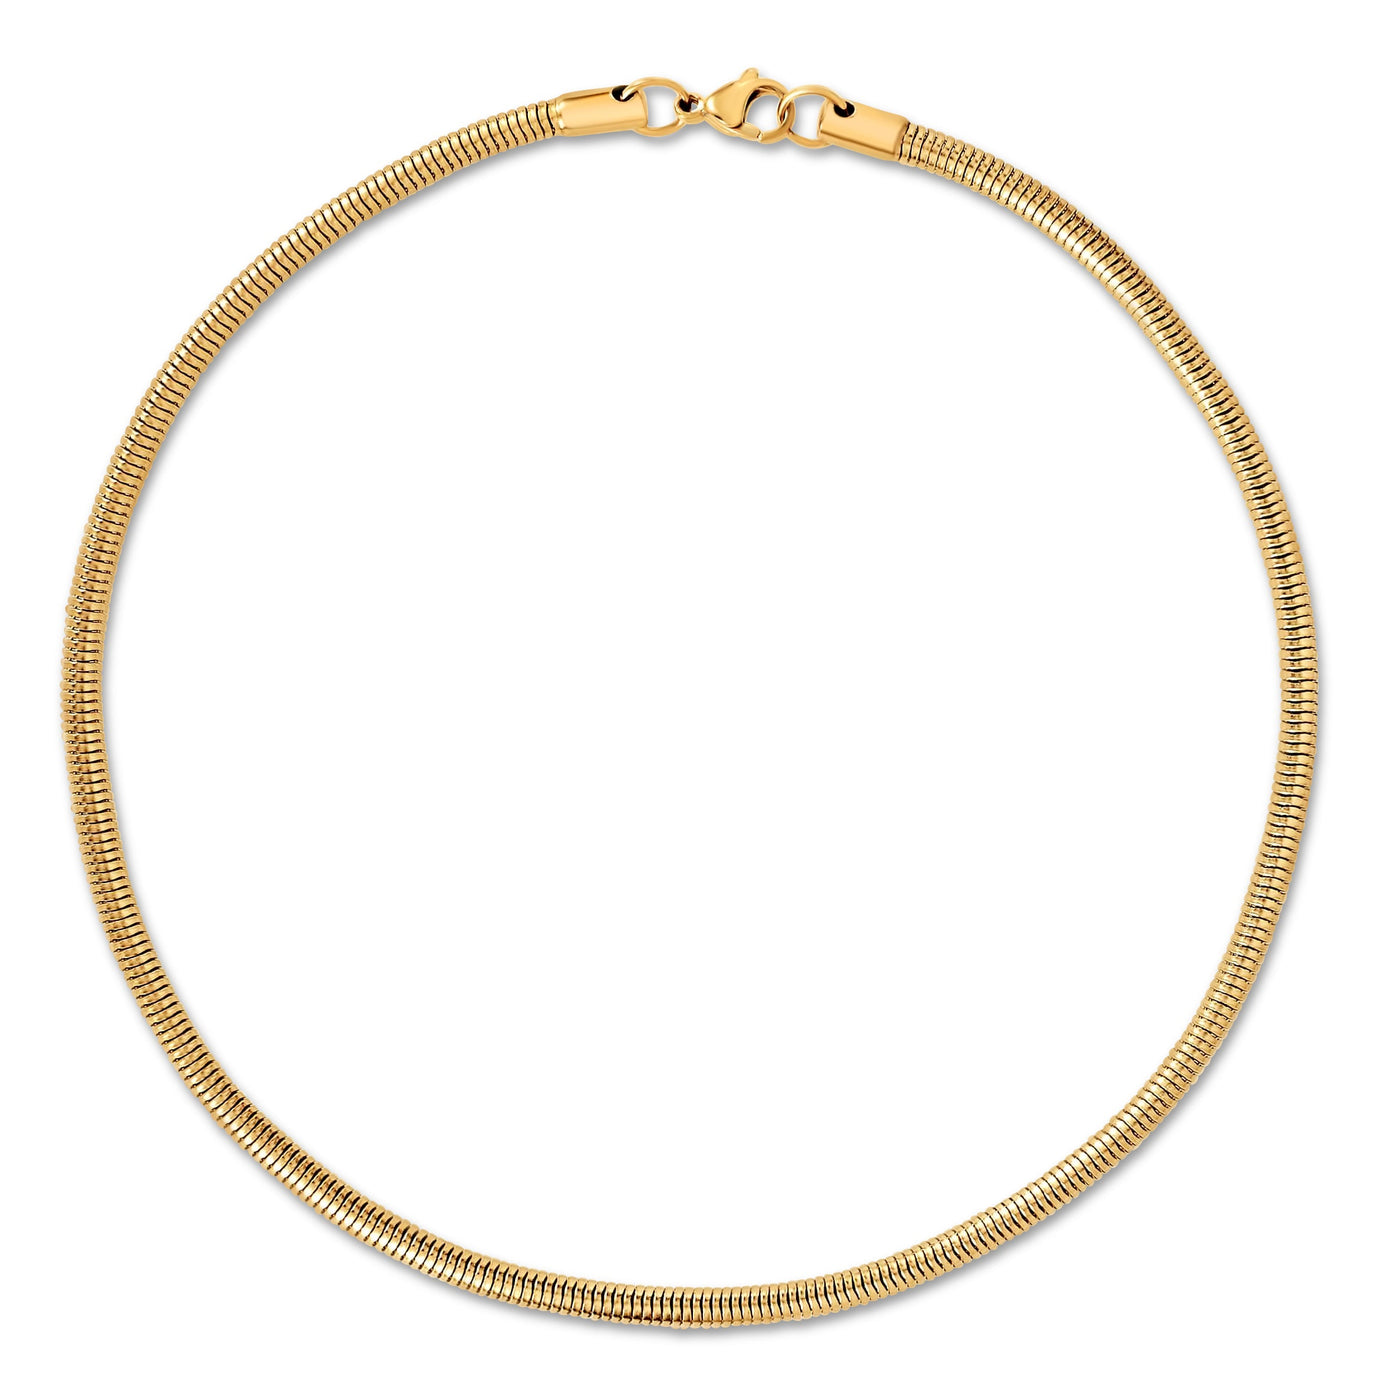 Candice Round Snake Chain Necklace - Ellie Vail